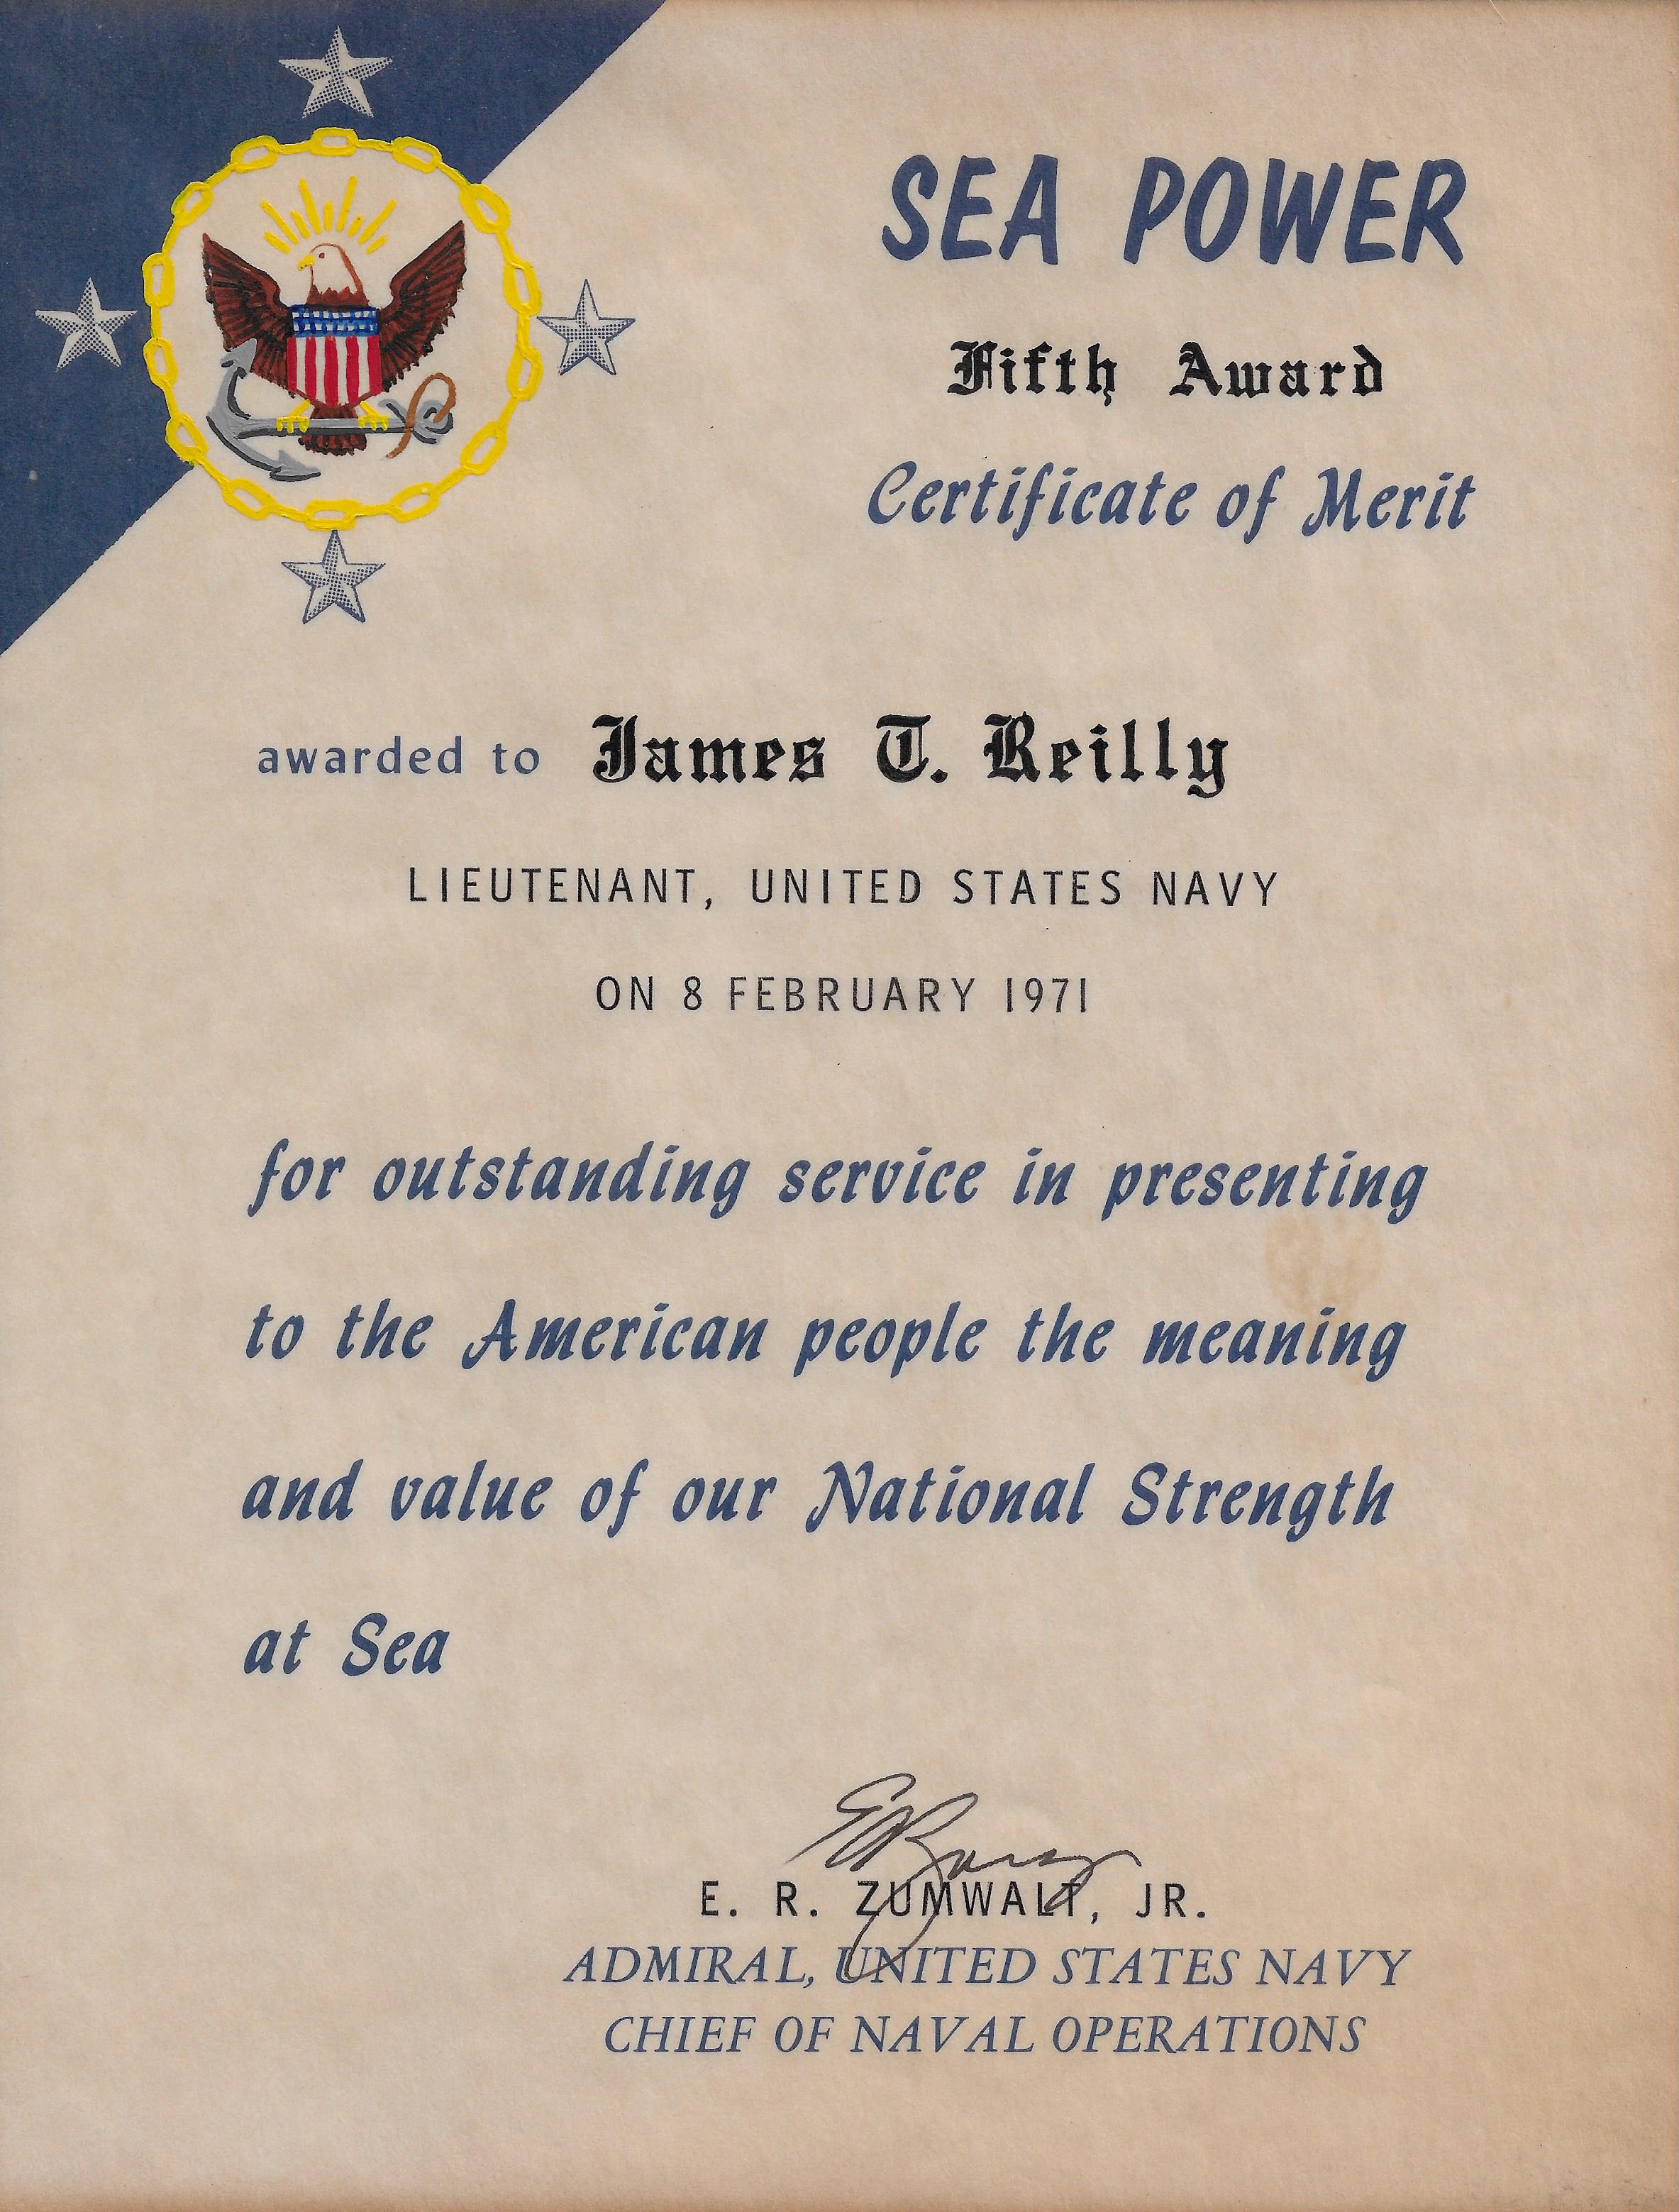 CNO Sea Power Certificate of Merit Fifth Award 710208